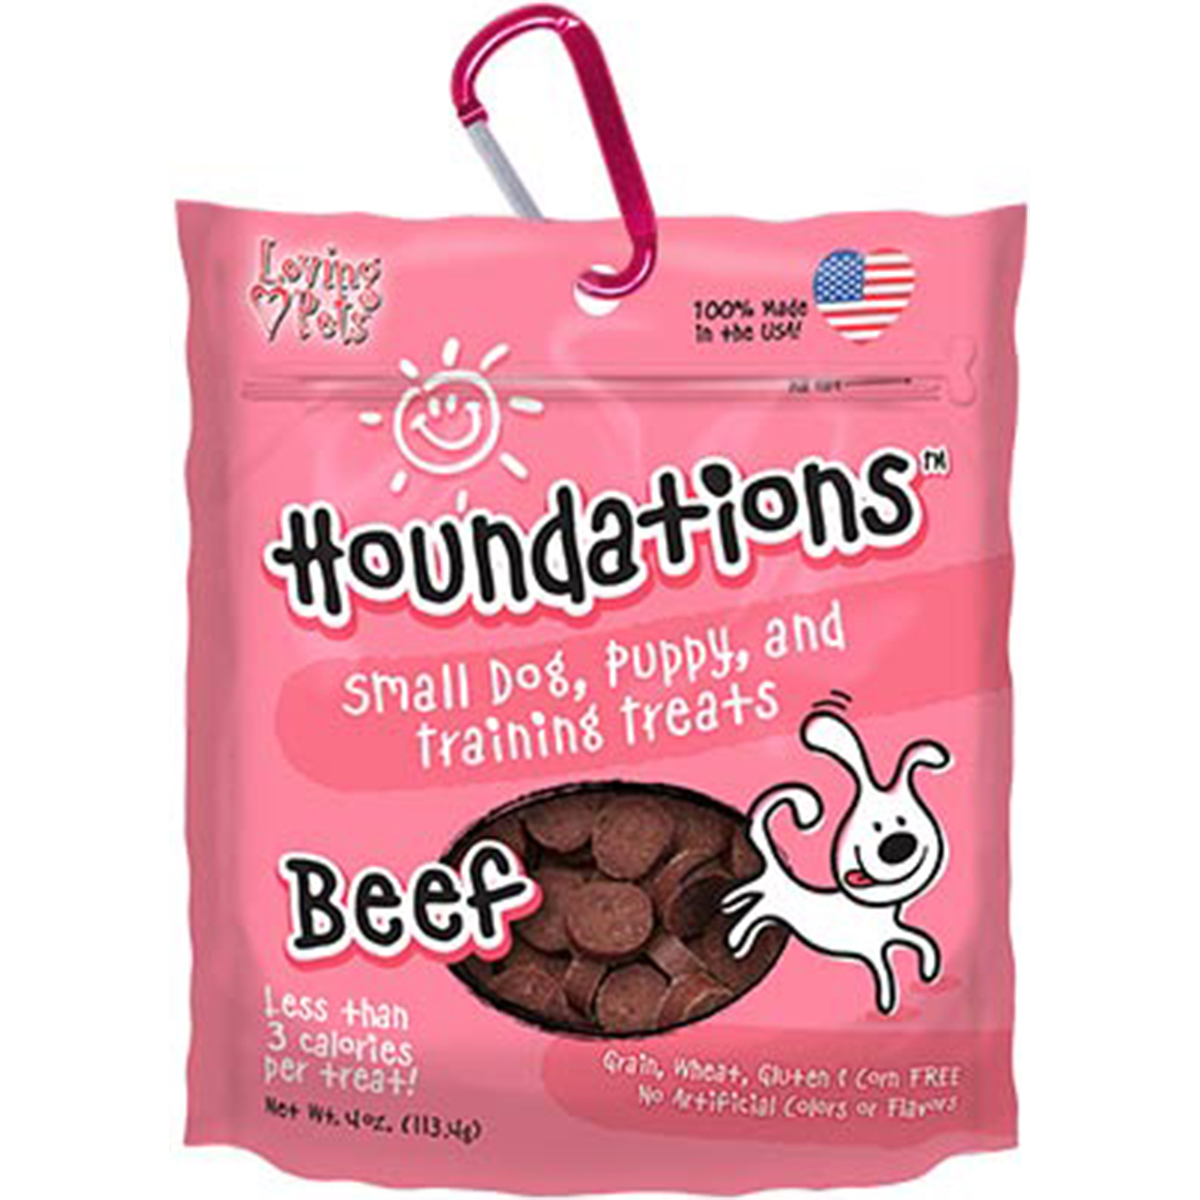 Lp8151 Beef Houndations Soft Chew Treats, 4 Oz